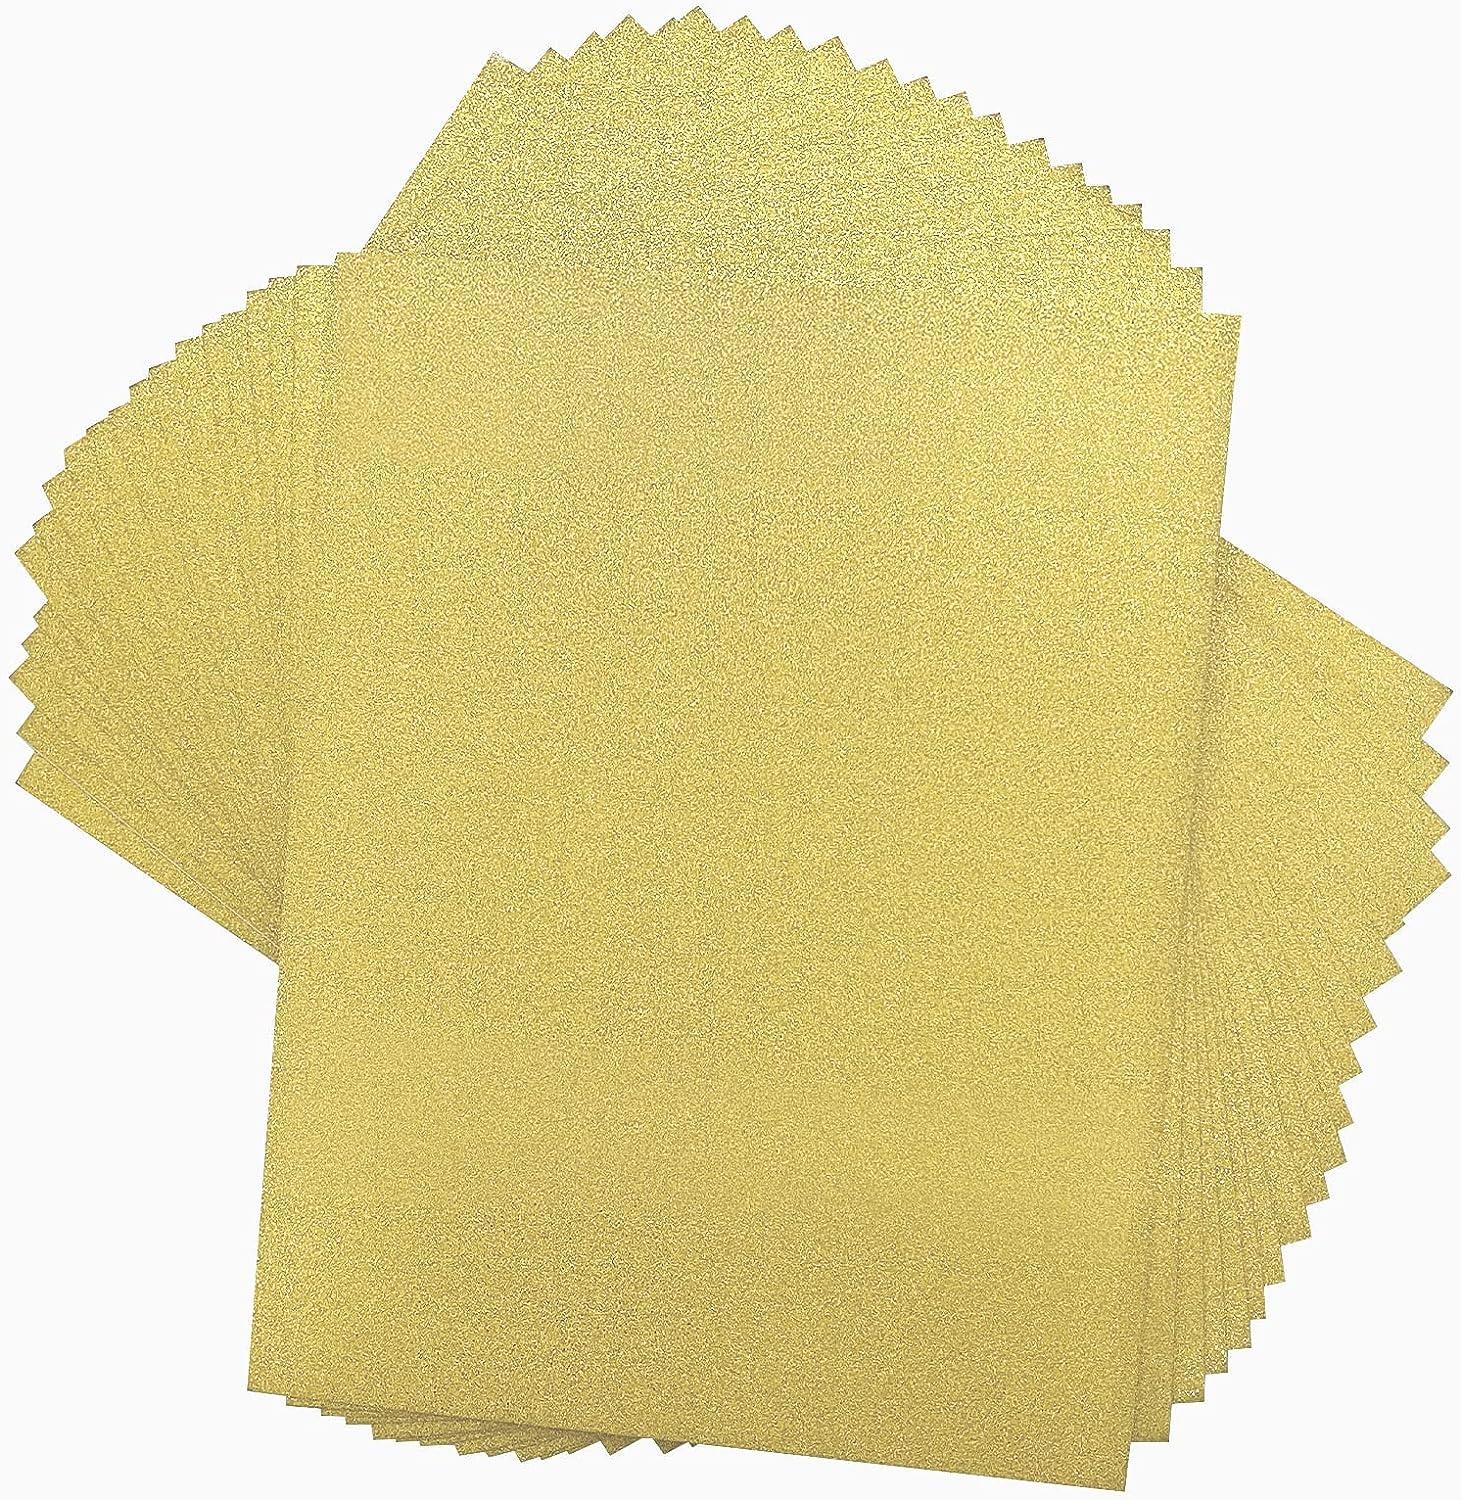 Simetufy Glitter Cardstock Paper, 40 Sheets 20 Colors, Colored Cardstock for Cricut, Premium Glitter Paper for Crafts, A4 Glitter Card Stock for DIY